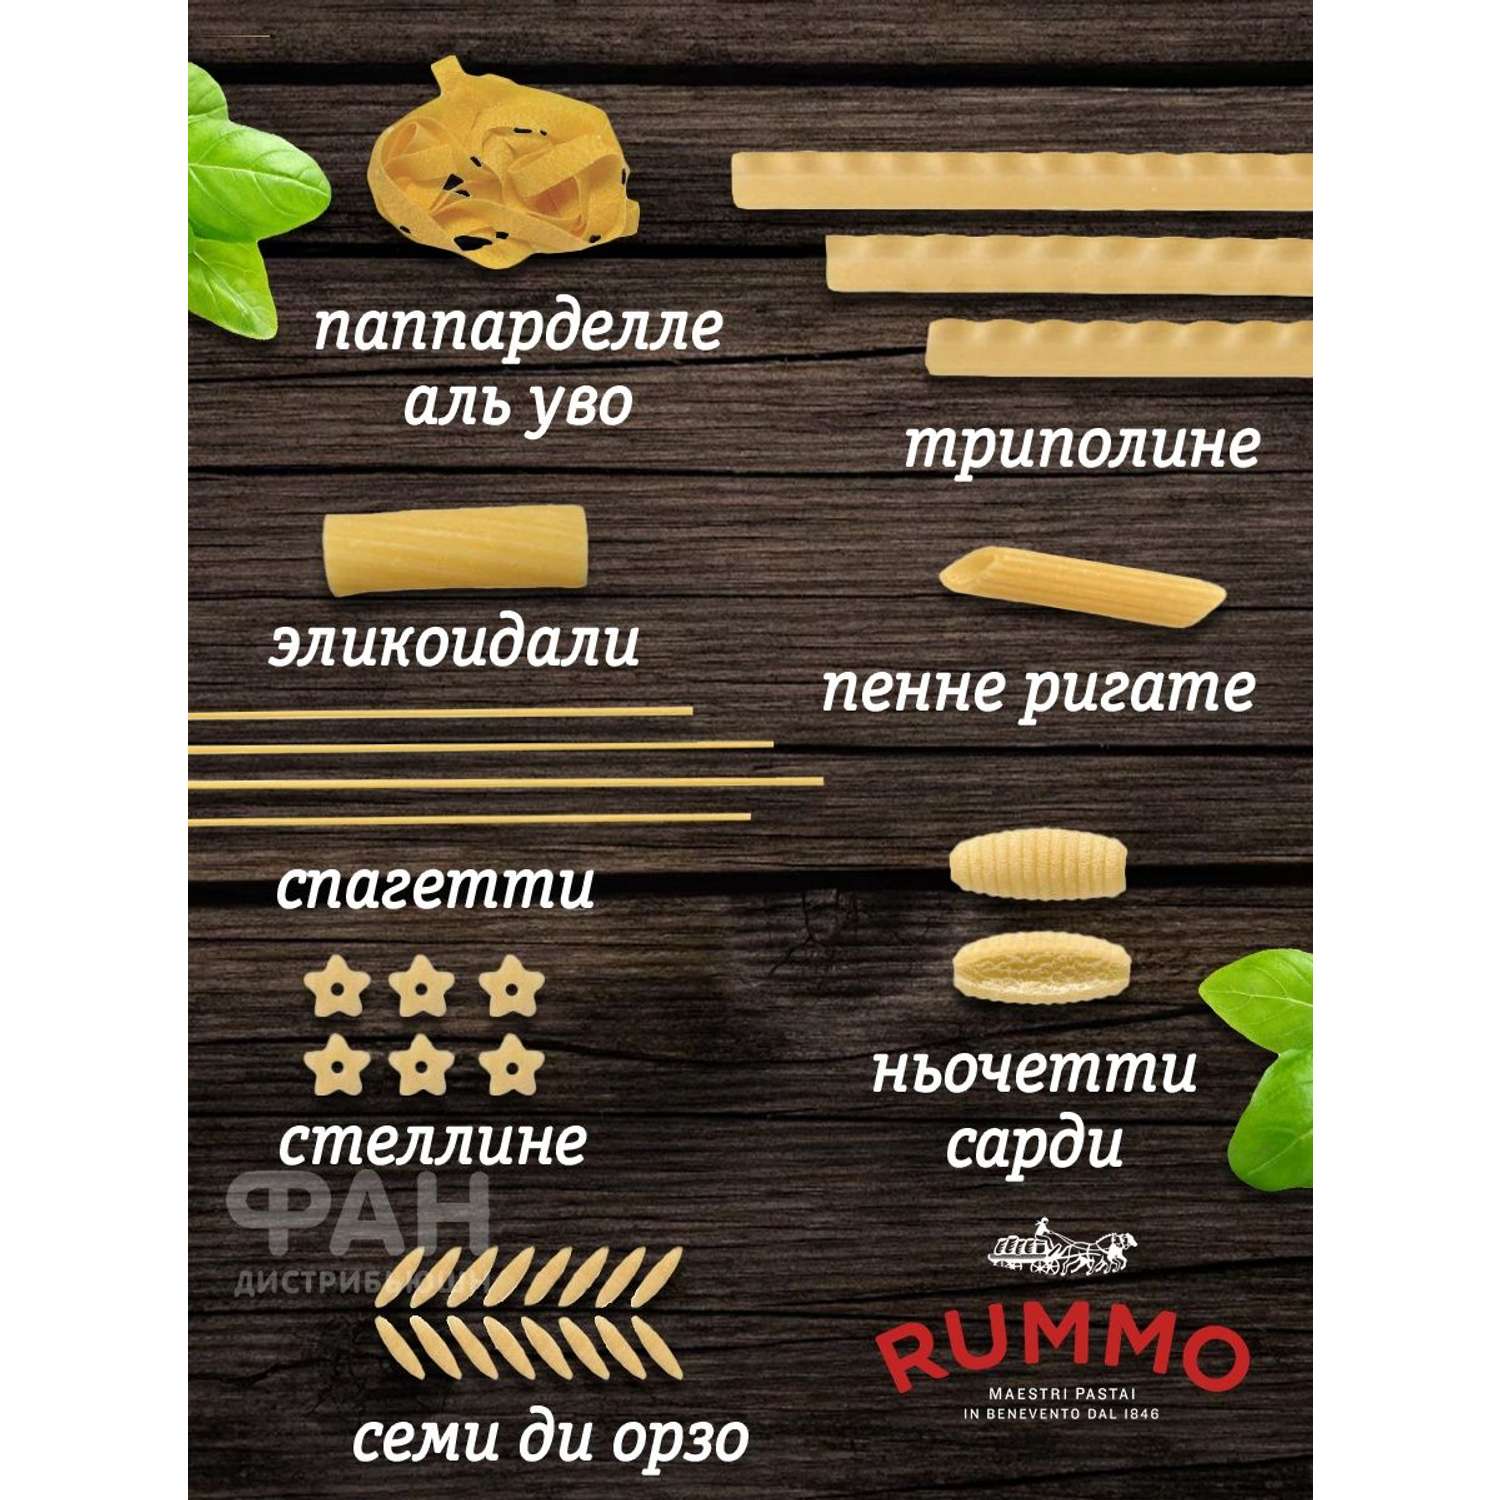 Макароны Rummo спагетти Капеллини 01 500 г - фото 7